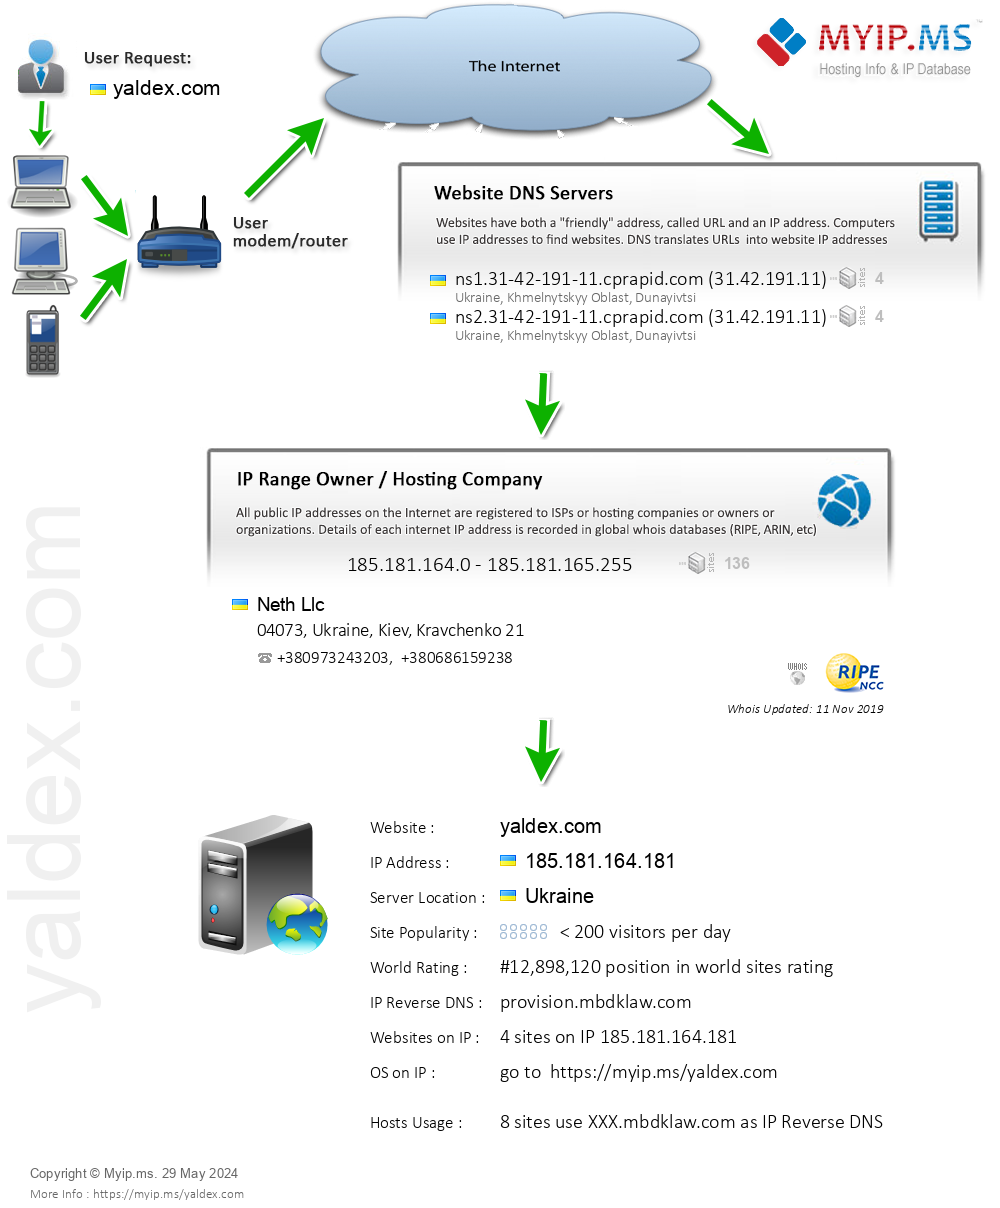 Yaldex.com - Website Hosting Visual IP Diagram